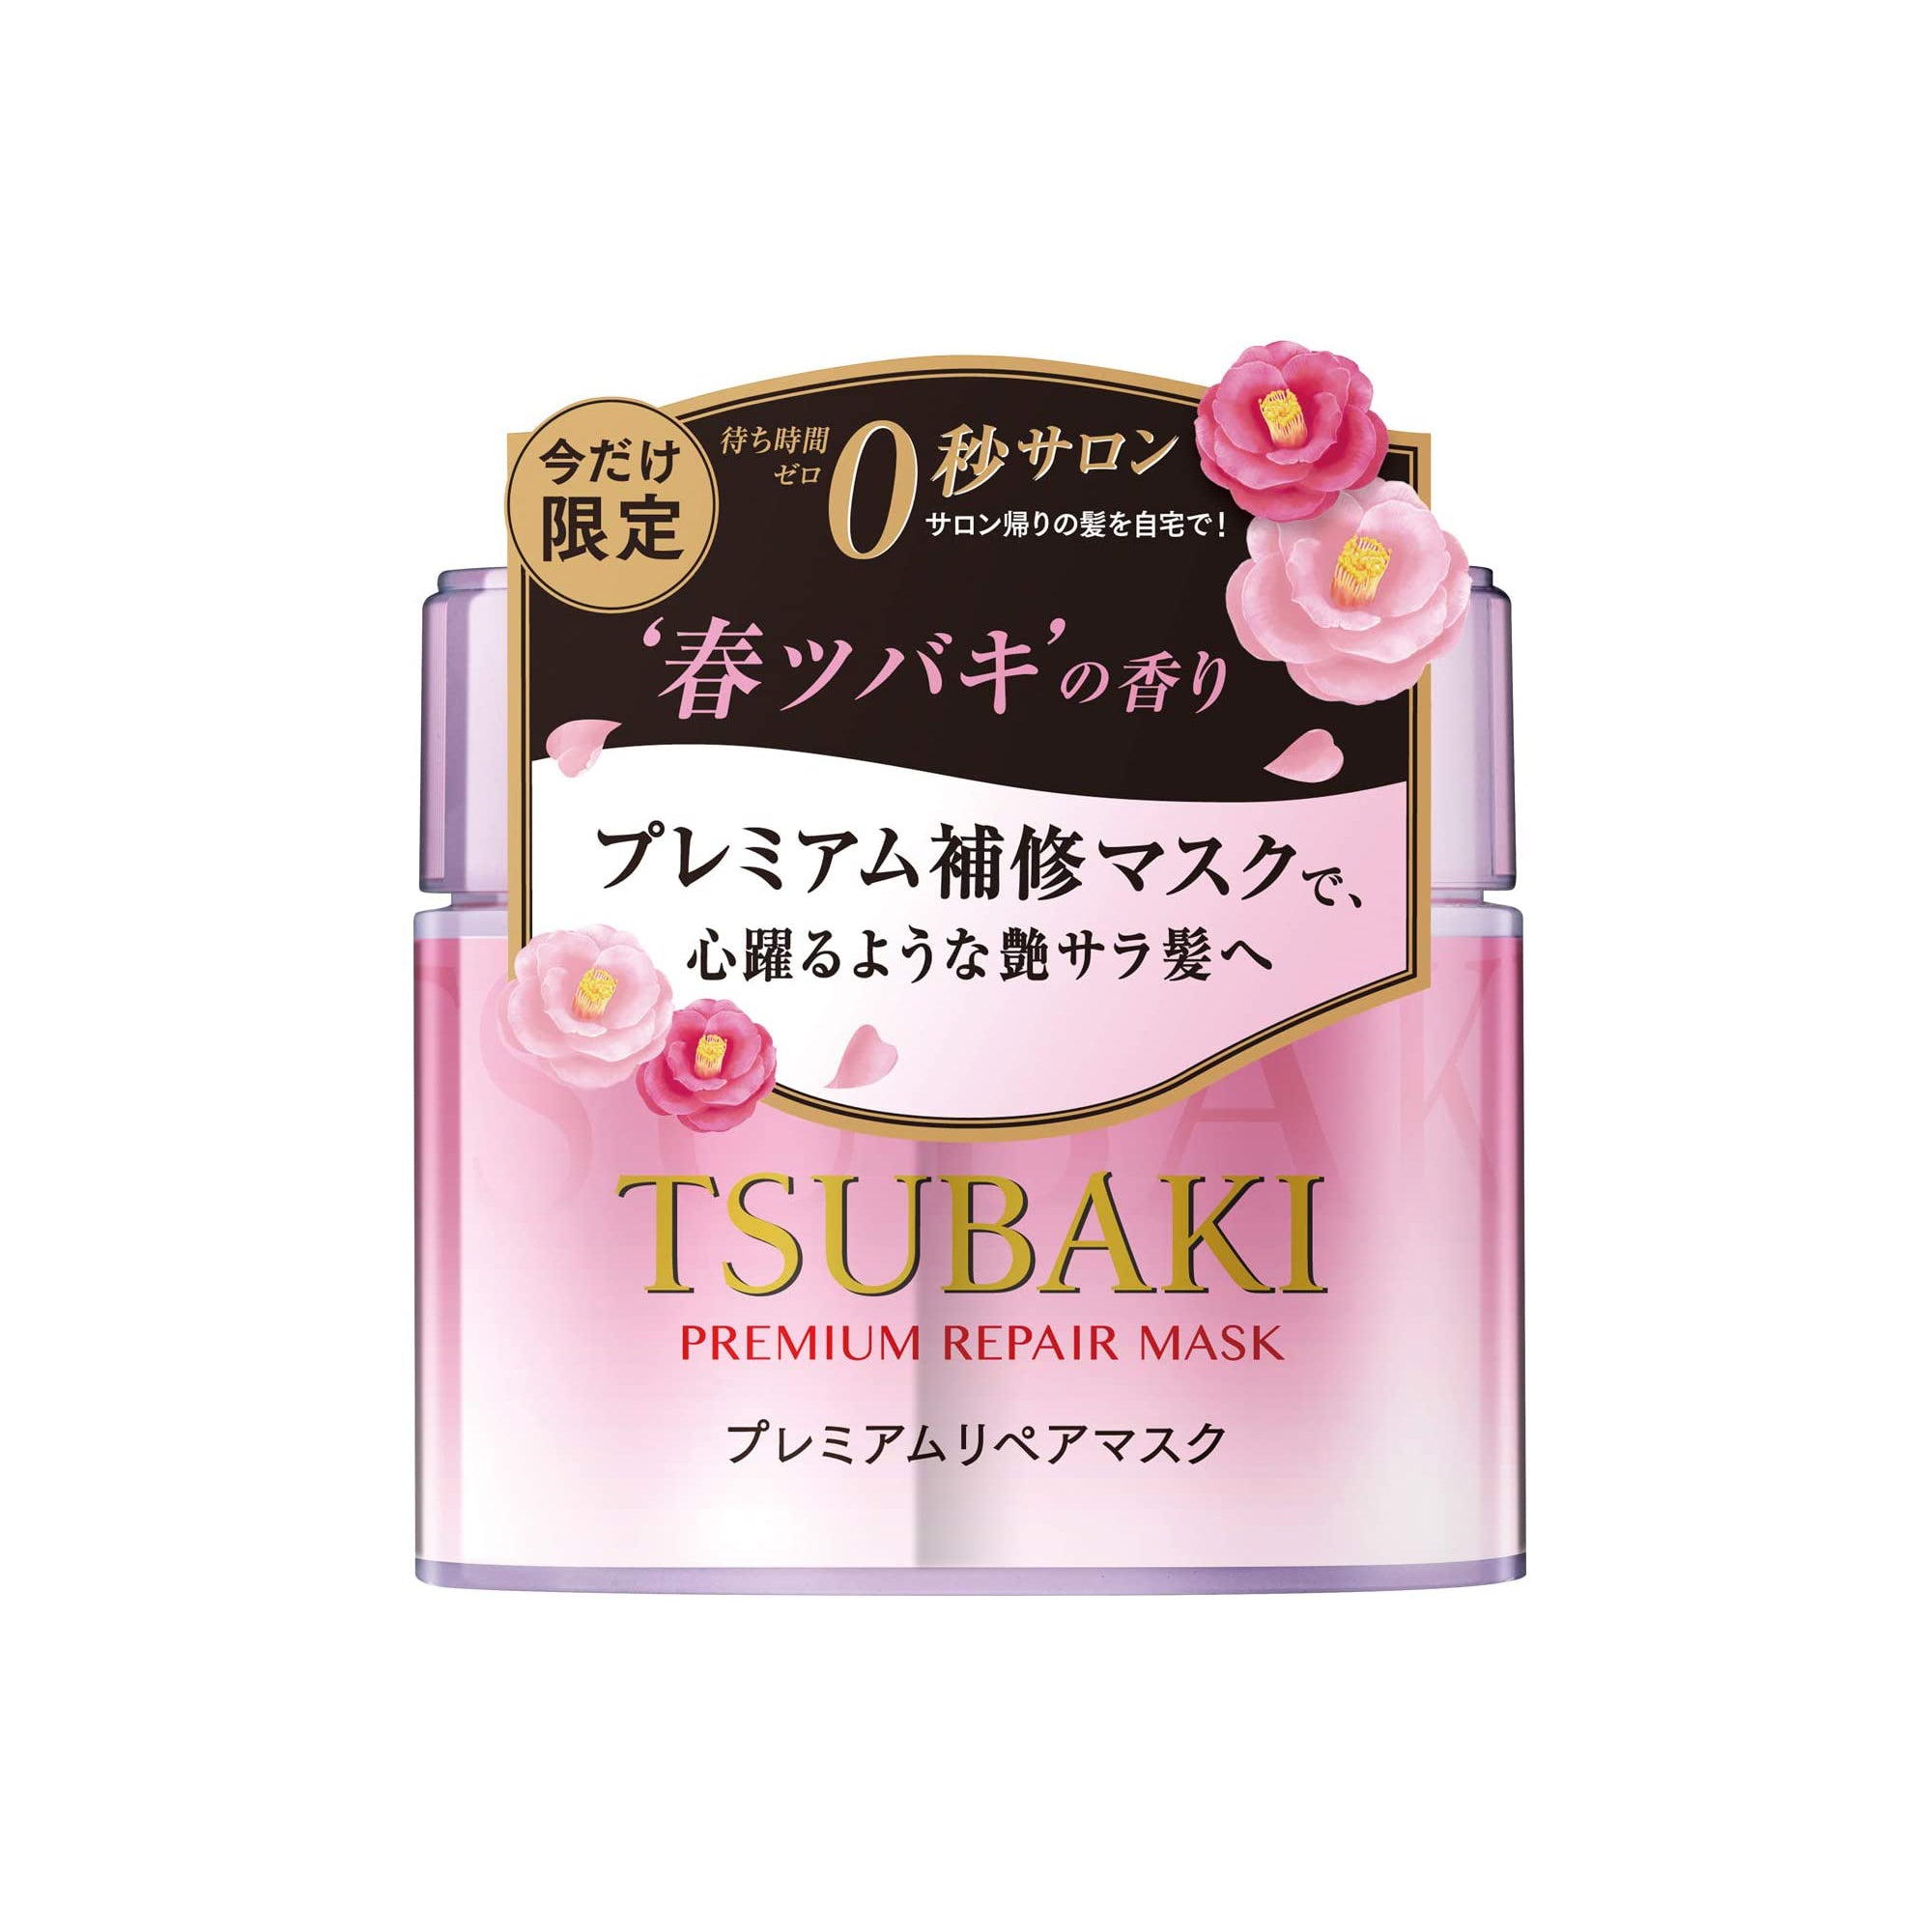 Shiseido Tsubaki Premium Repair Hair Mask Spring Floral Beauty Shiseido   